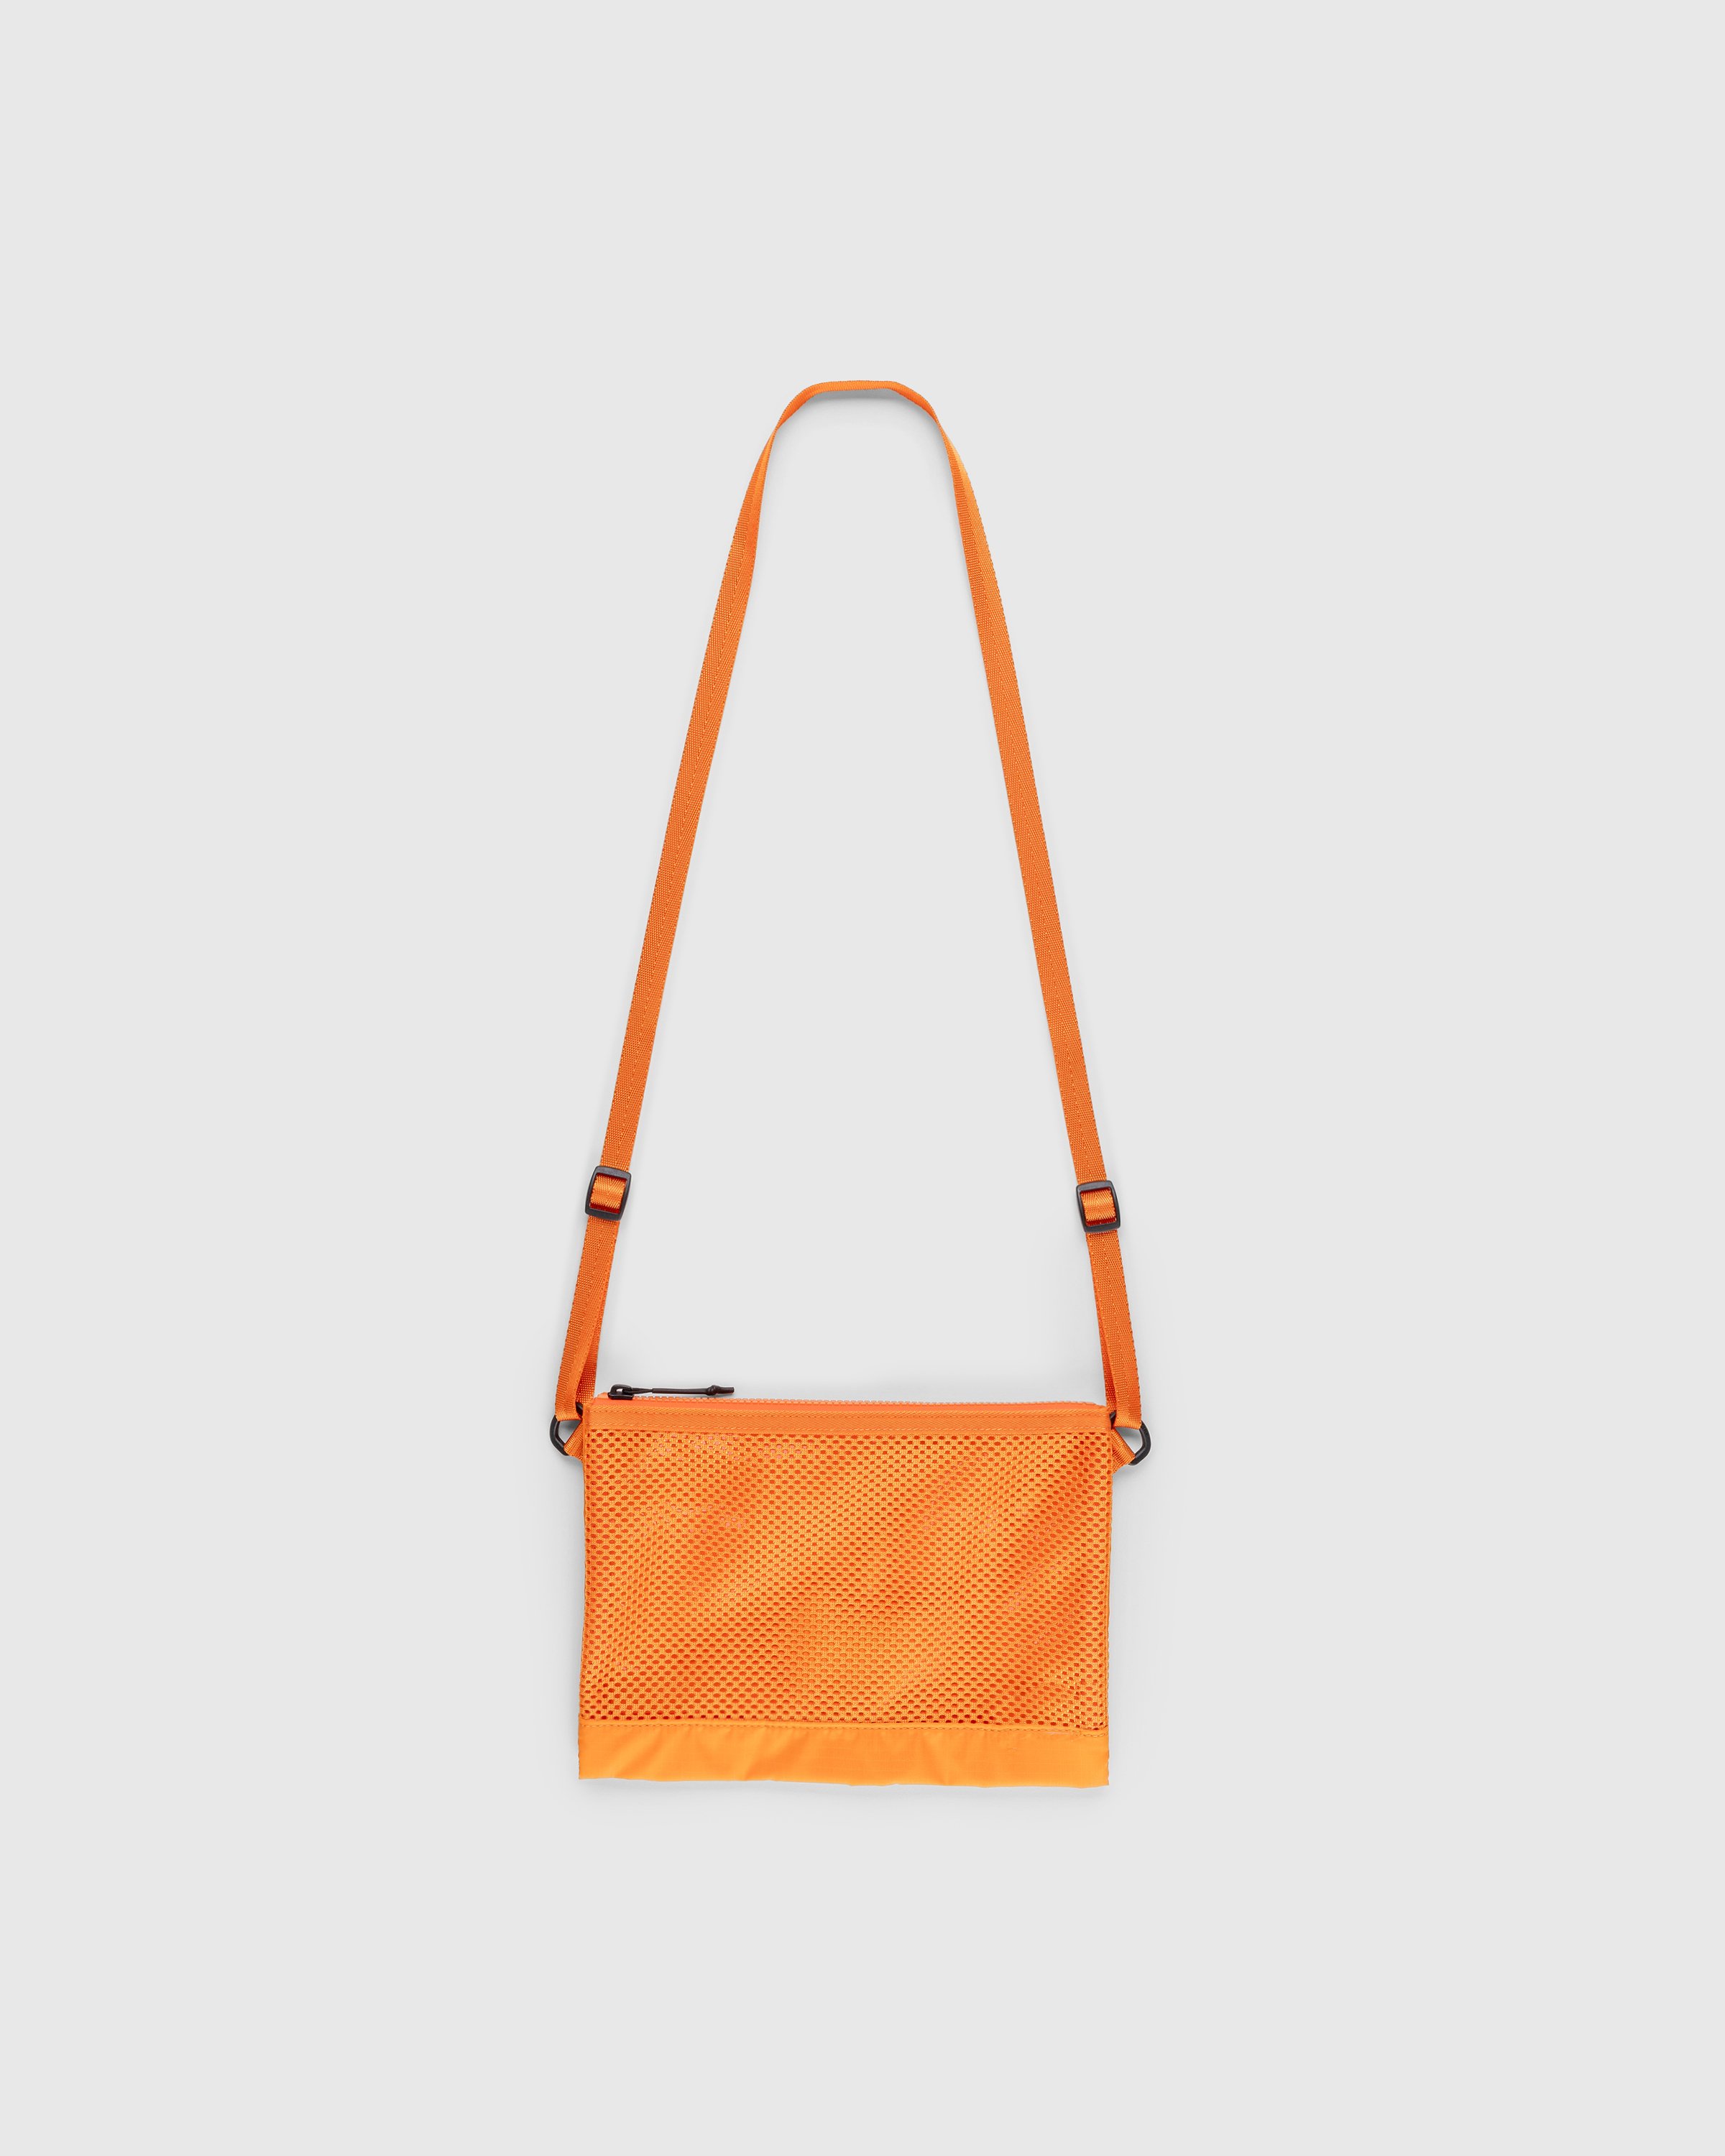 Porter-Yoshida & Co. - Sacoche Screen Shoulder Bag Orange - Accessories - Orange - Image 2